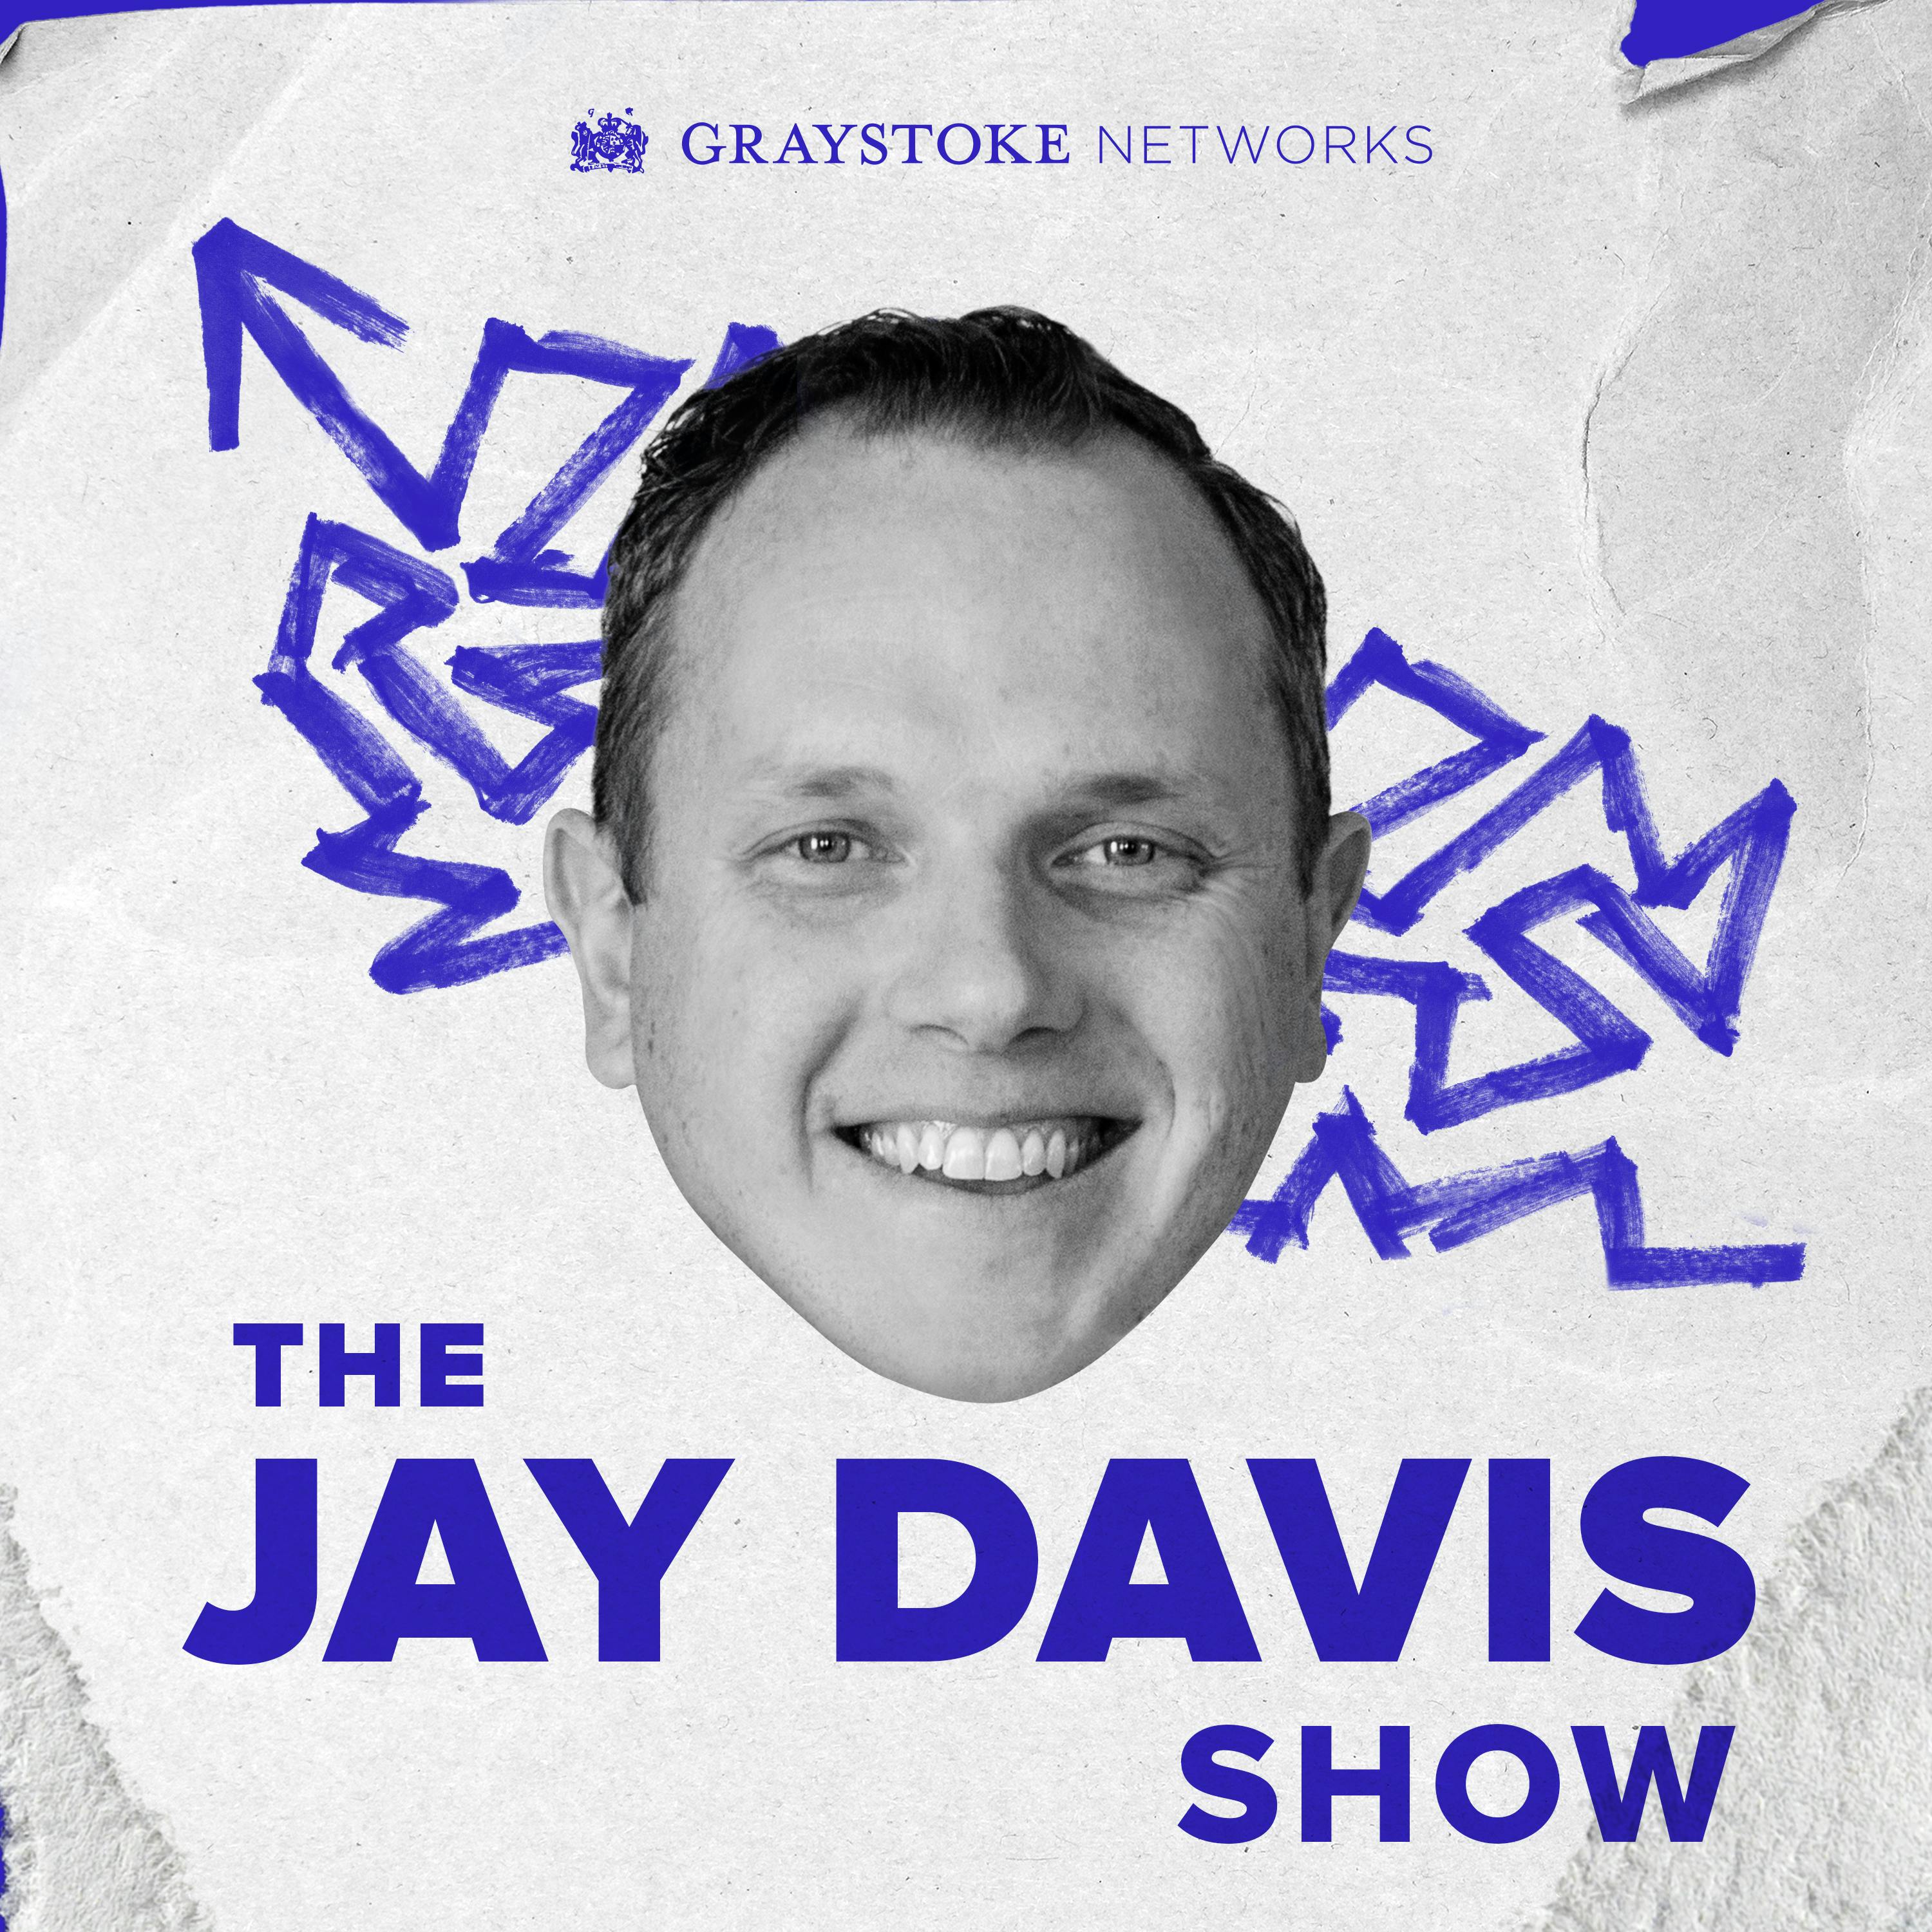 The Jay Davis Show Album Art